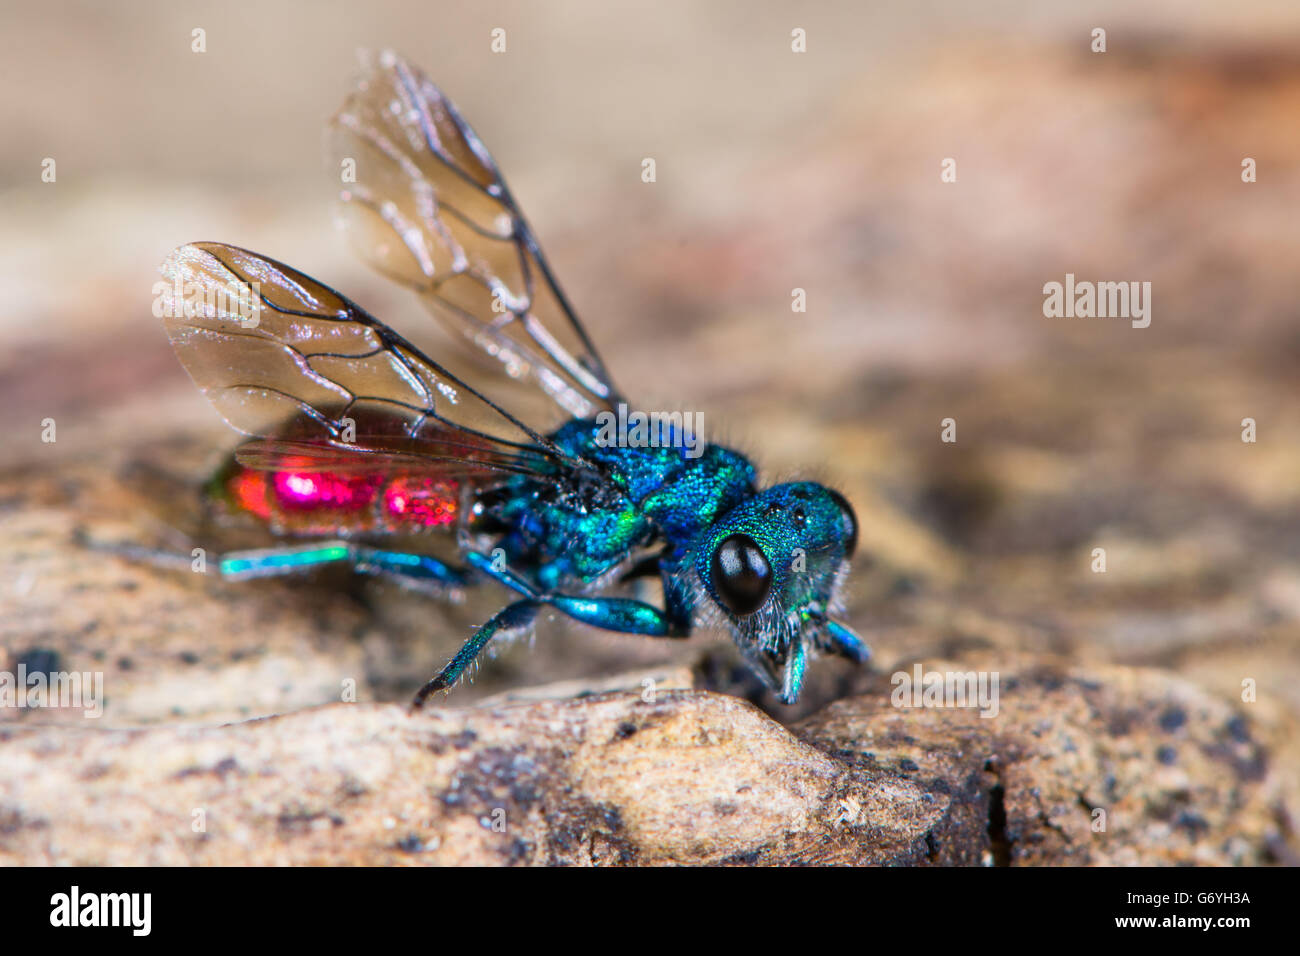 Ruby-tailed wasp (Chrysis sp.). Il cuculo wasp in famiglia i Crisidi con luminosi blu metallico e marcature rosse, aka emerald wasp Foto Stock